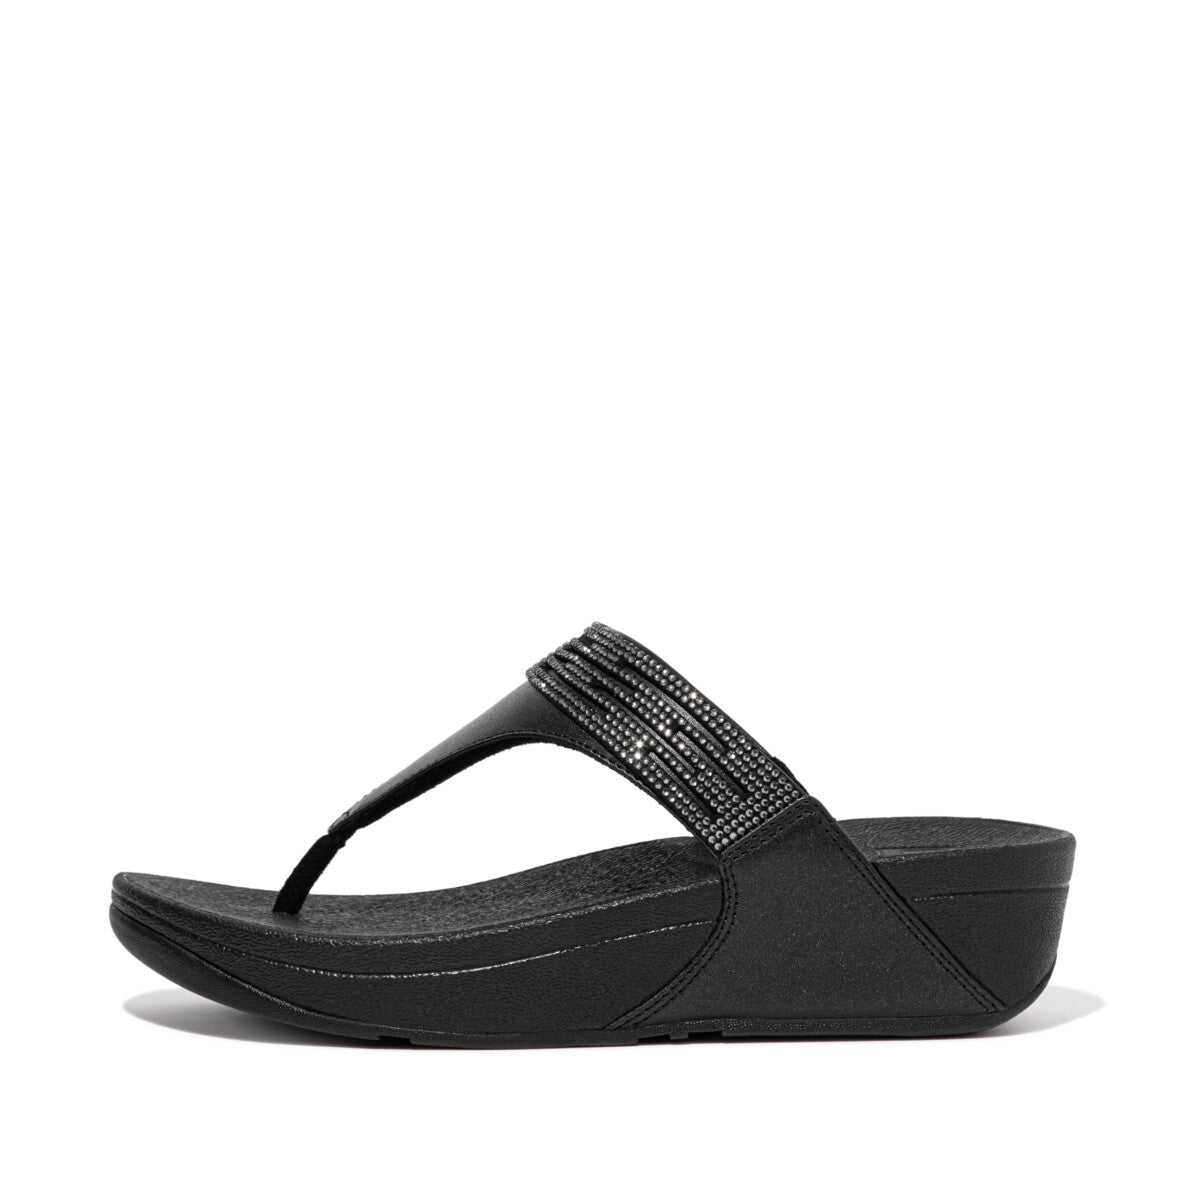 Fit Flop Lulu Lasercrystal Leather Toe-Post Sandals Black כפכפי פיט פלופ לנשים שחור